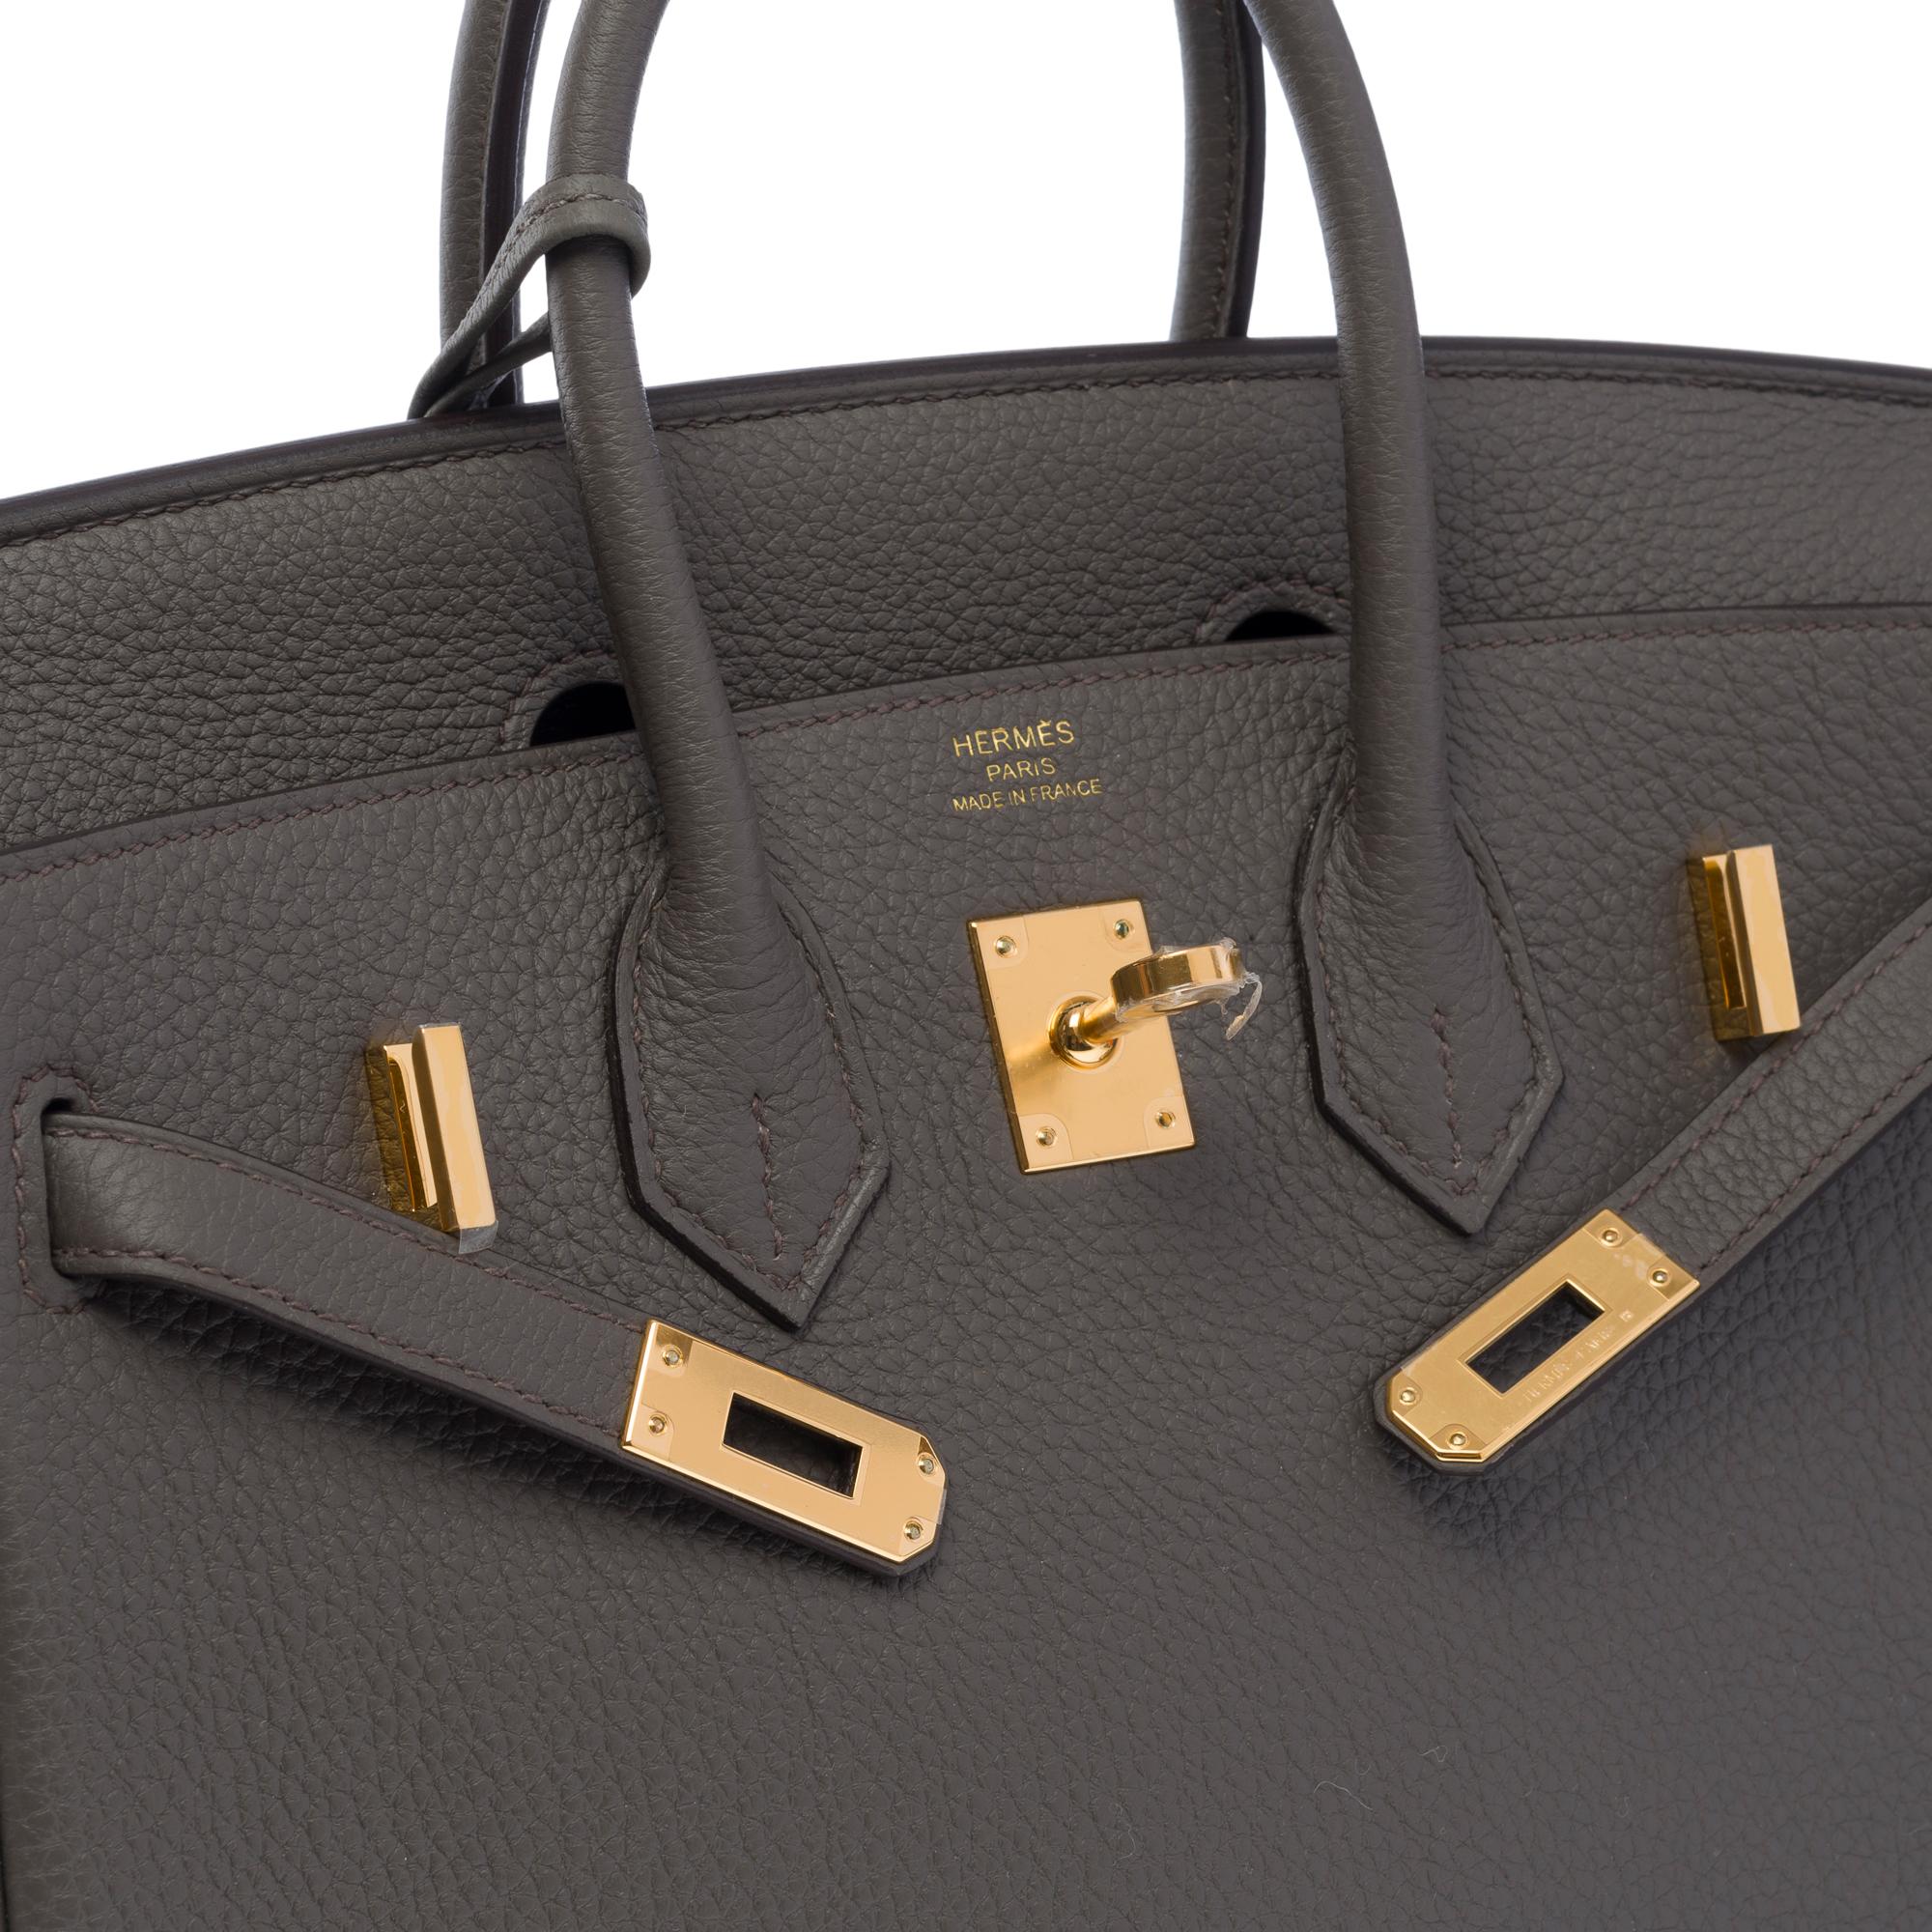 Fantastic New Hermes Birkin 25cm handbag in Etain Togo leather, GHW 2